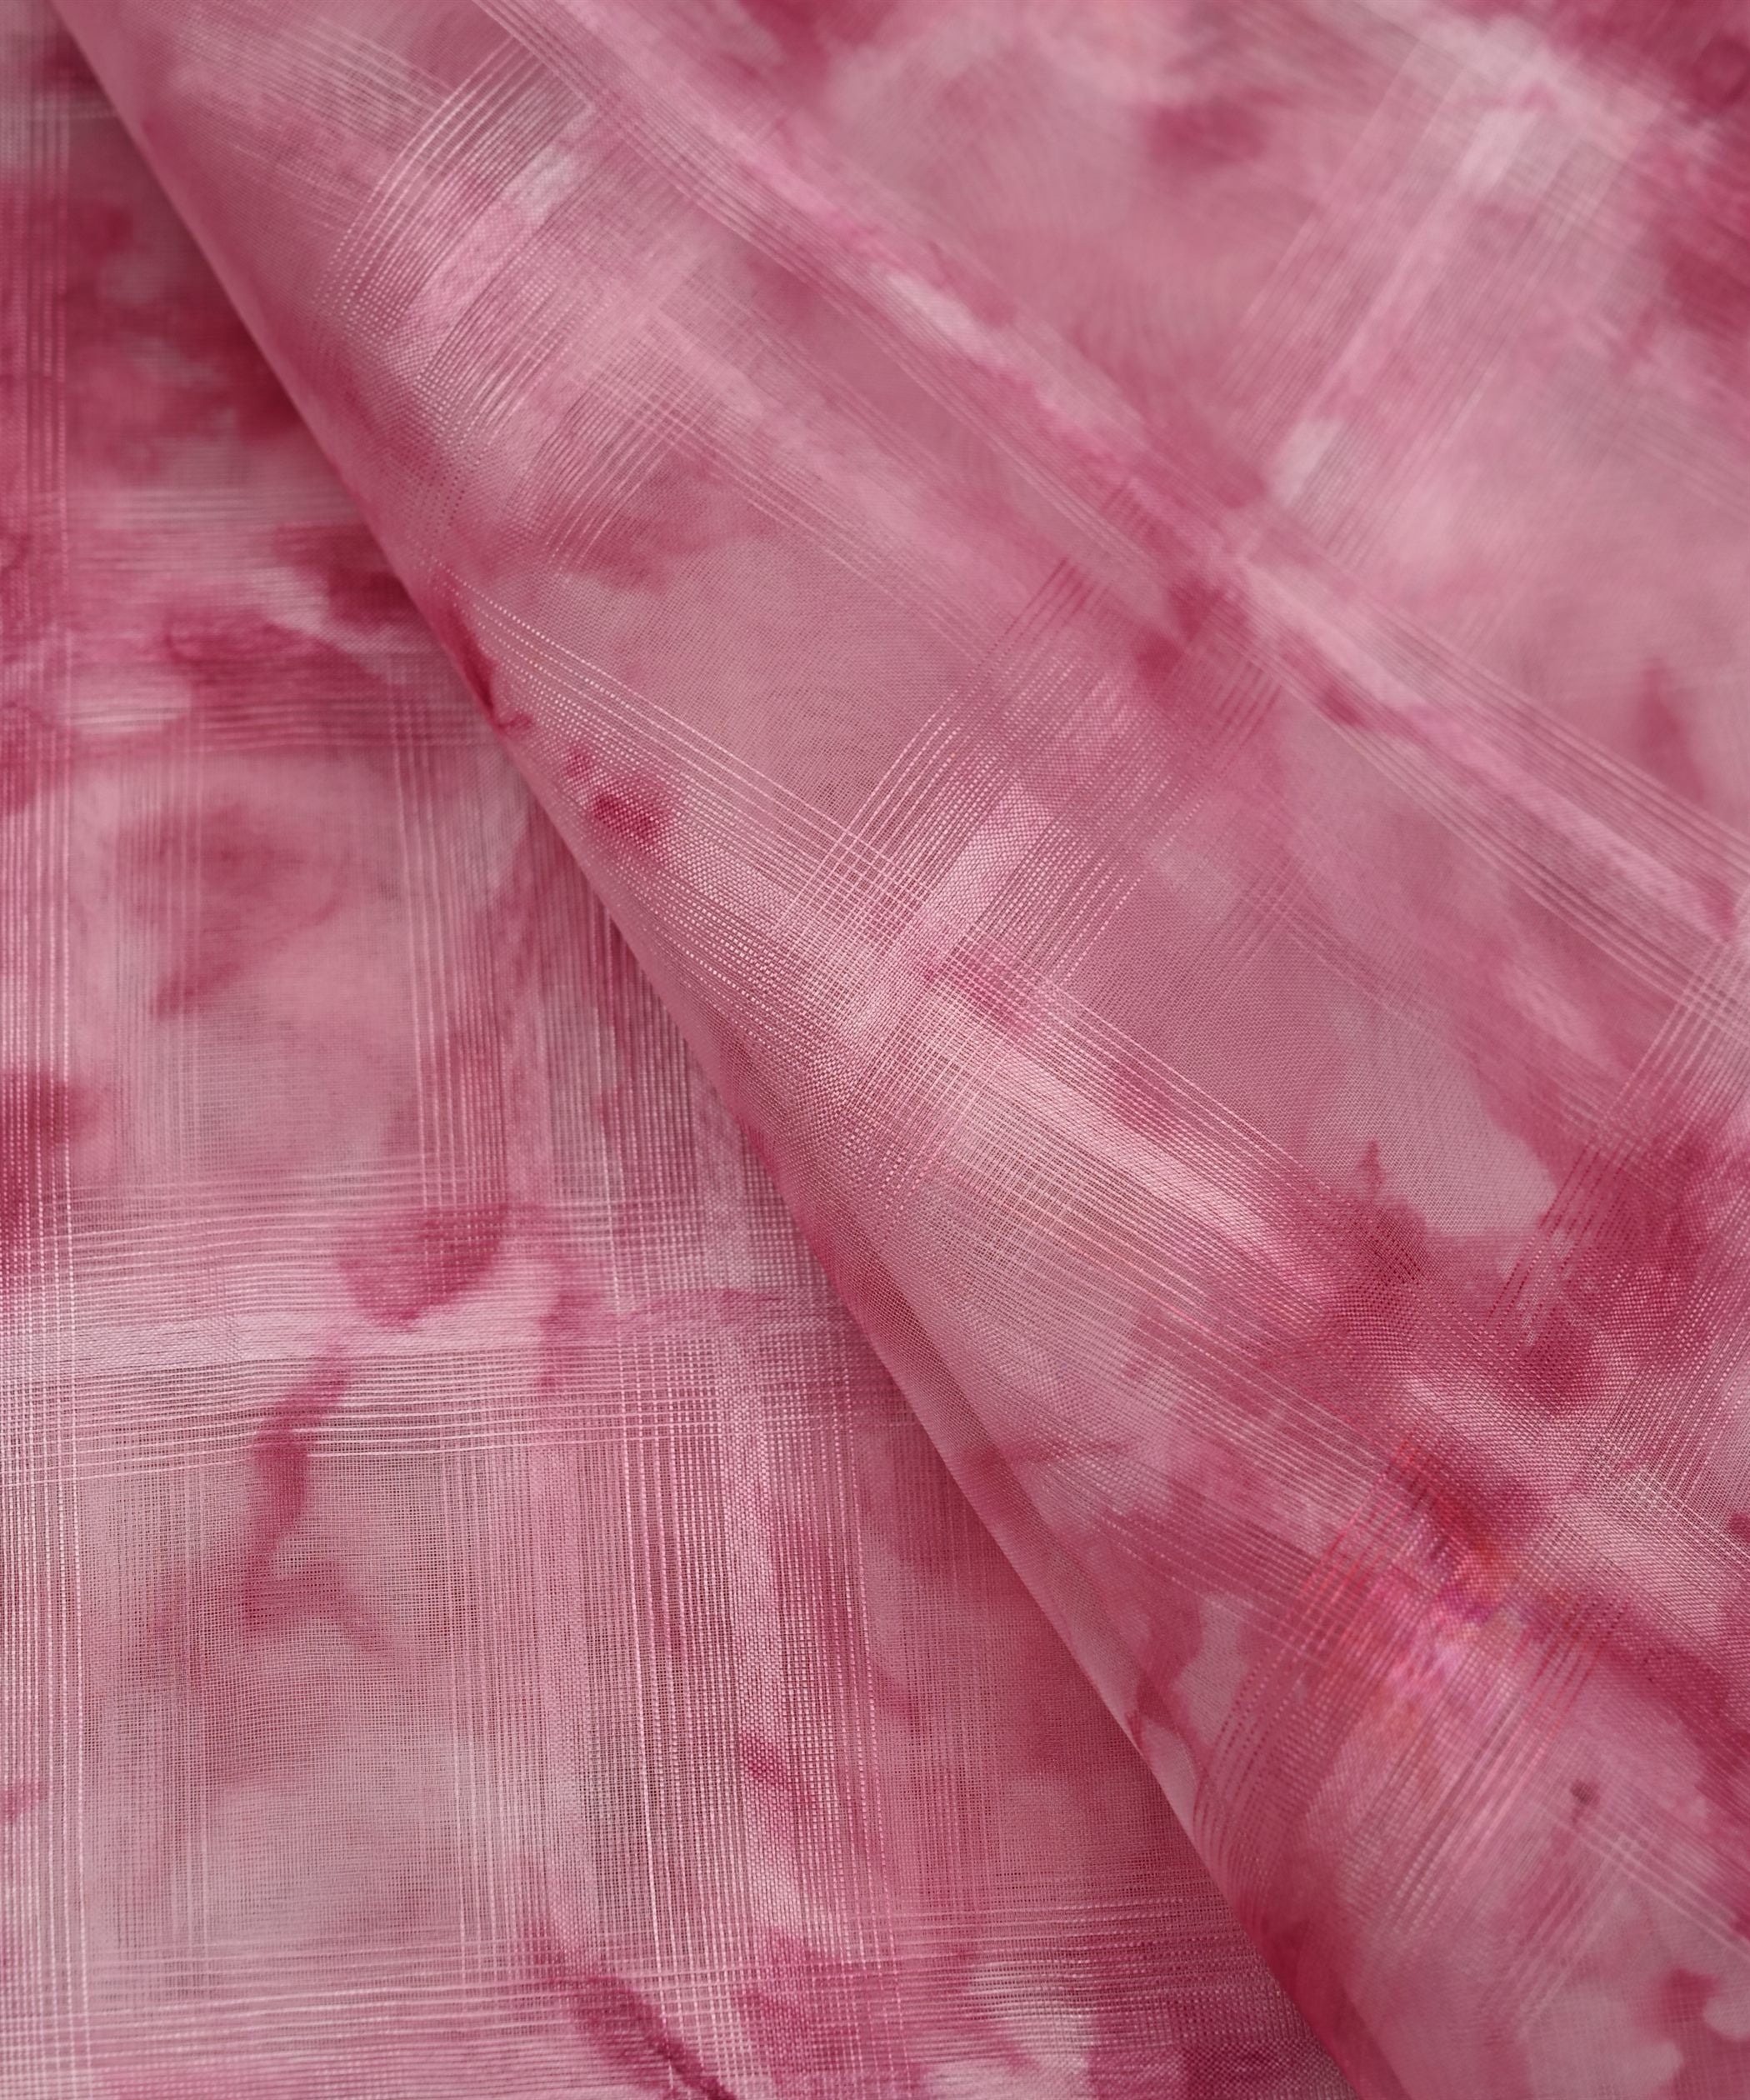 Pink Shibori Organza Fabric with Checks